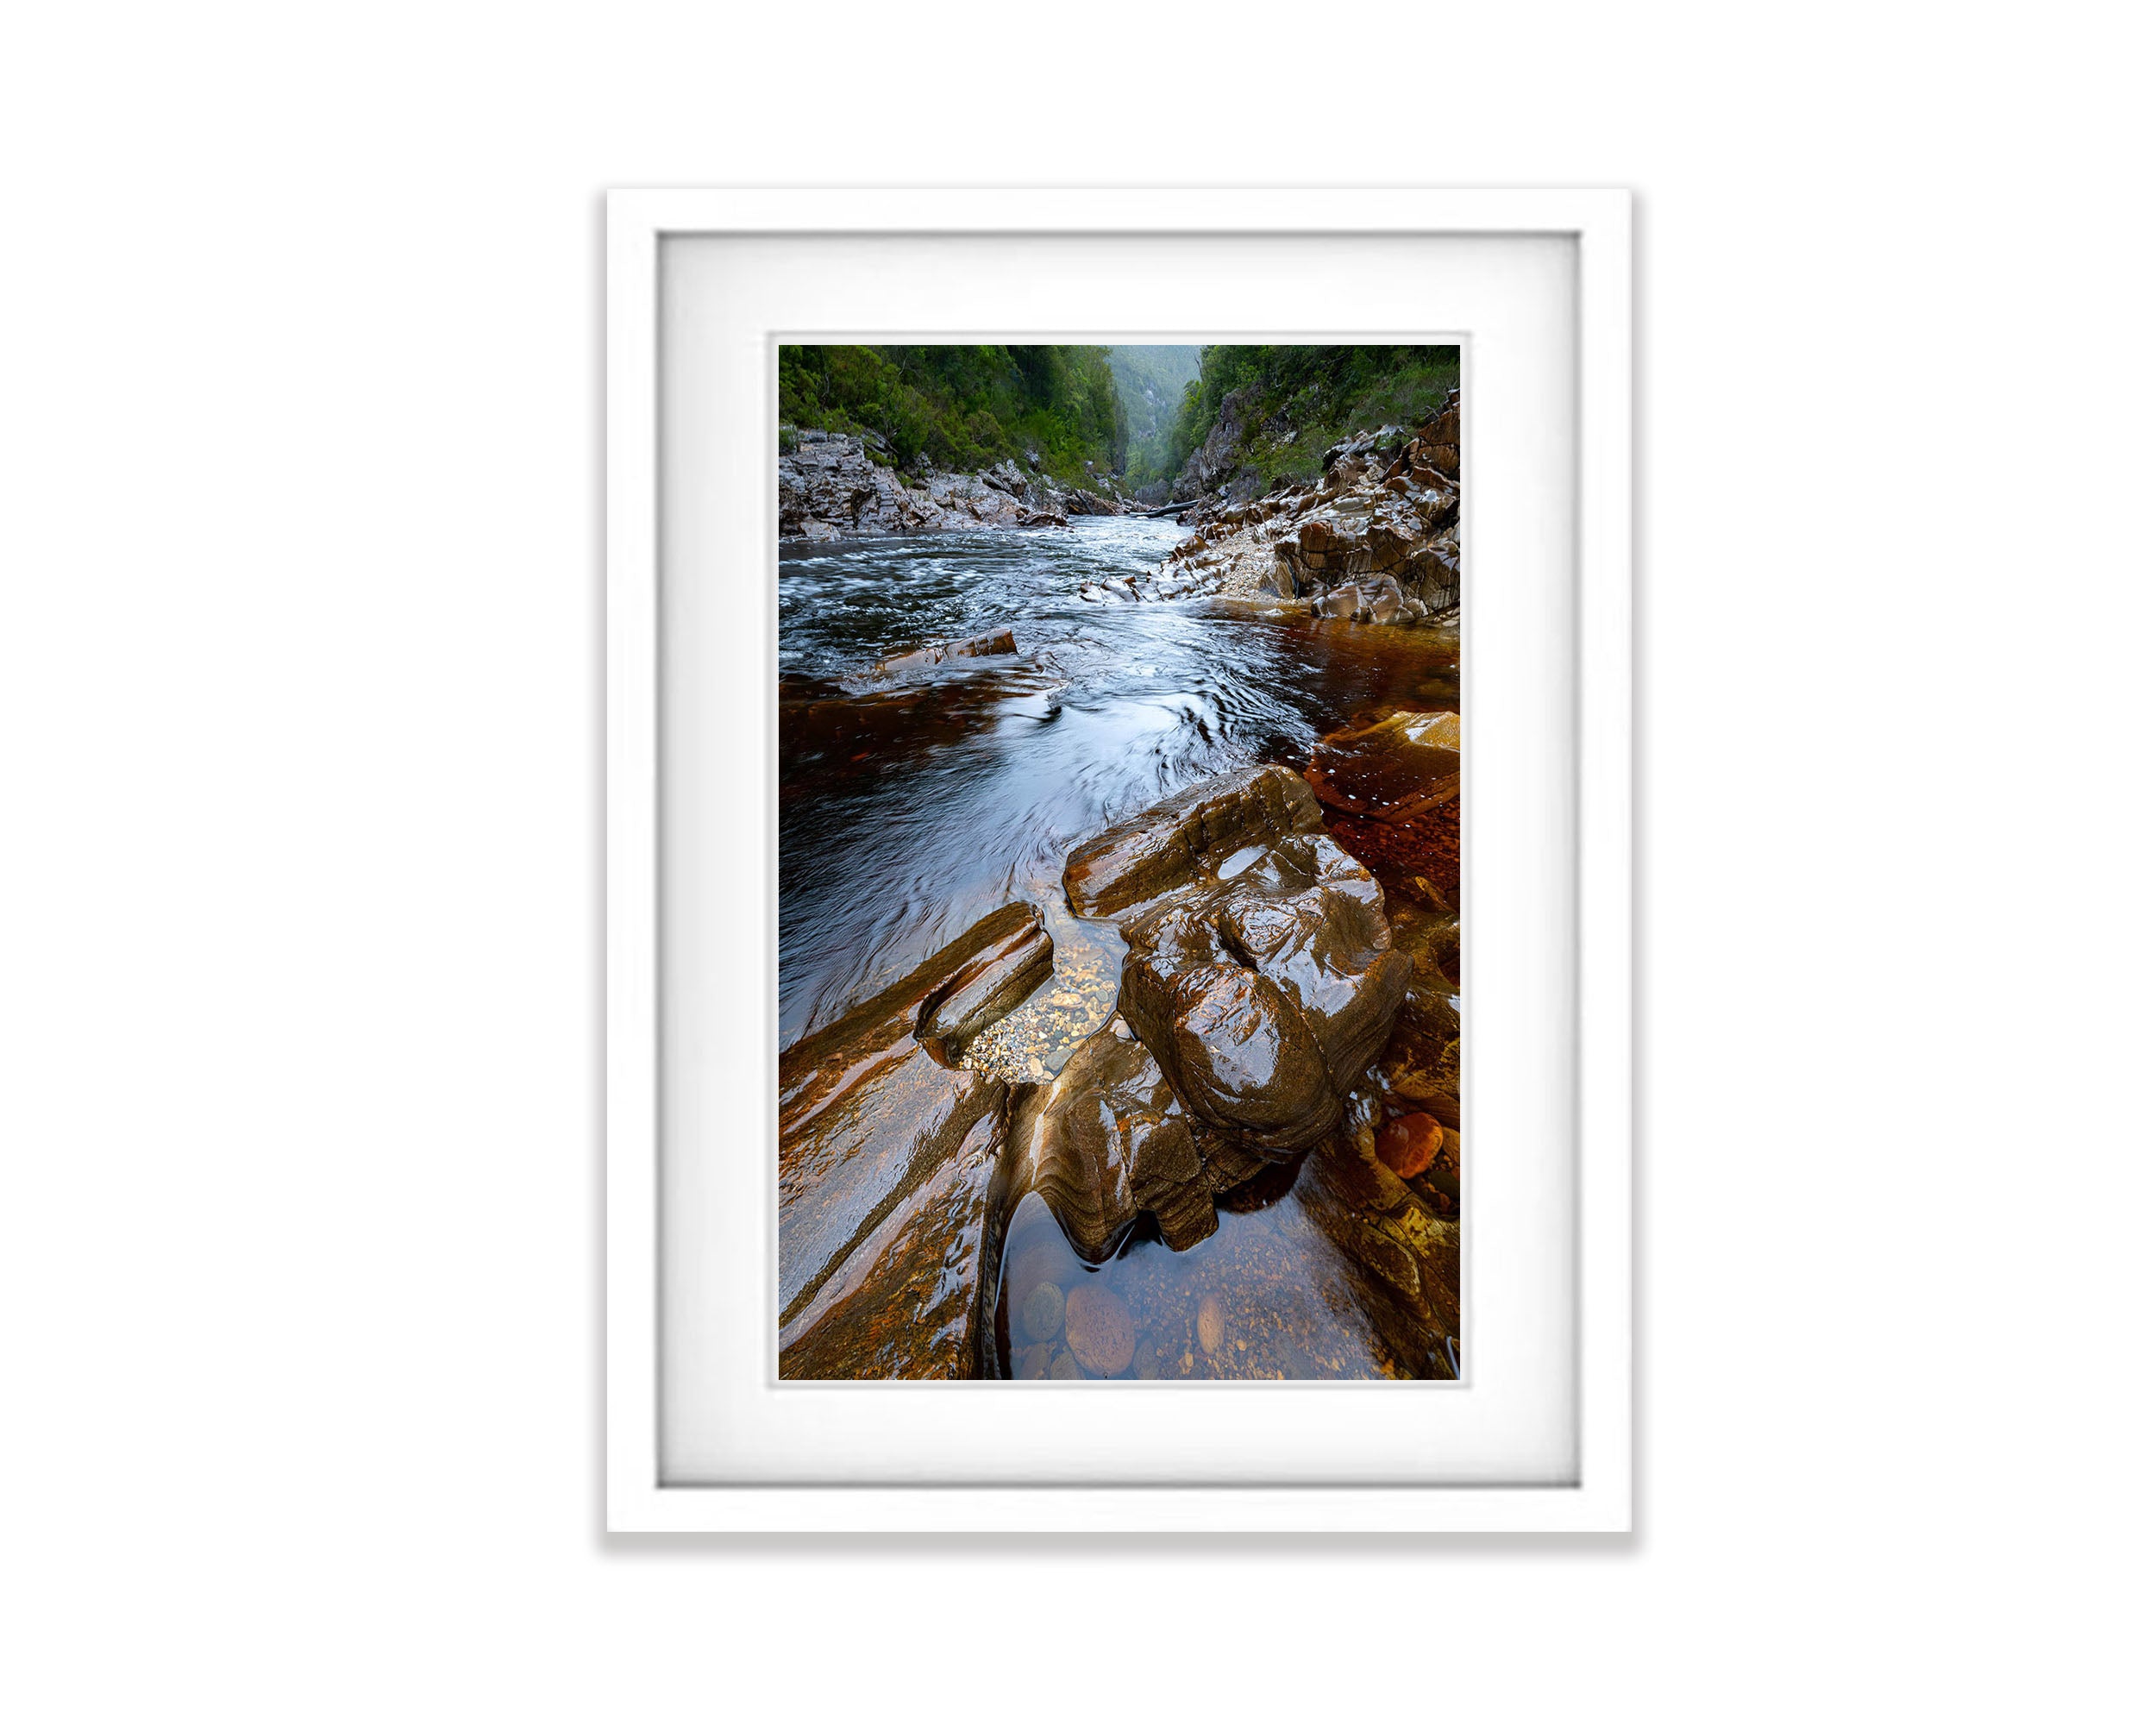 Polished Rocks #2, The Franklin River, Tasmania